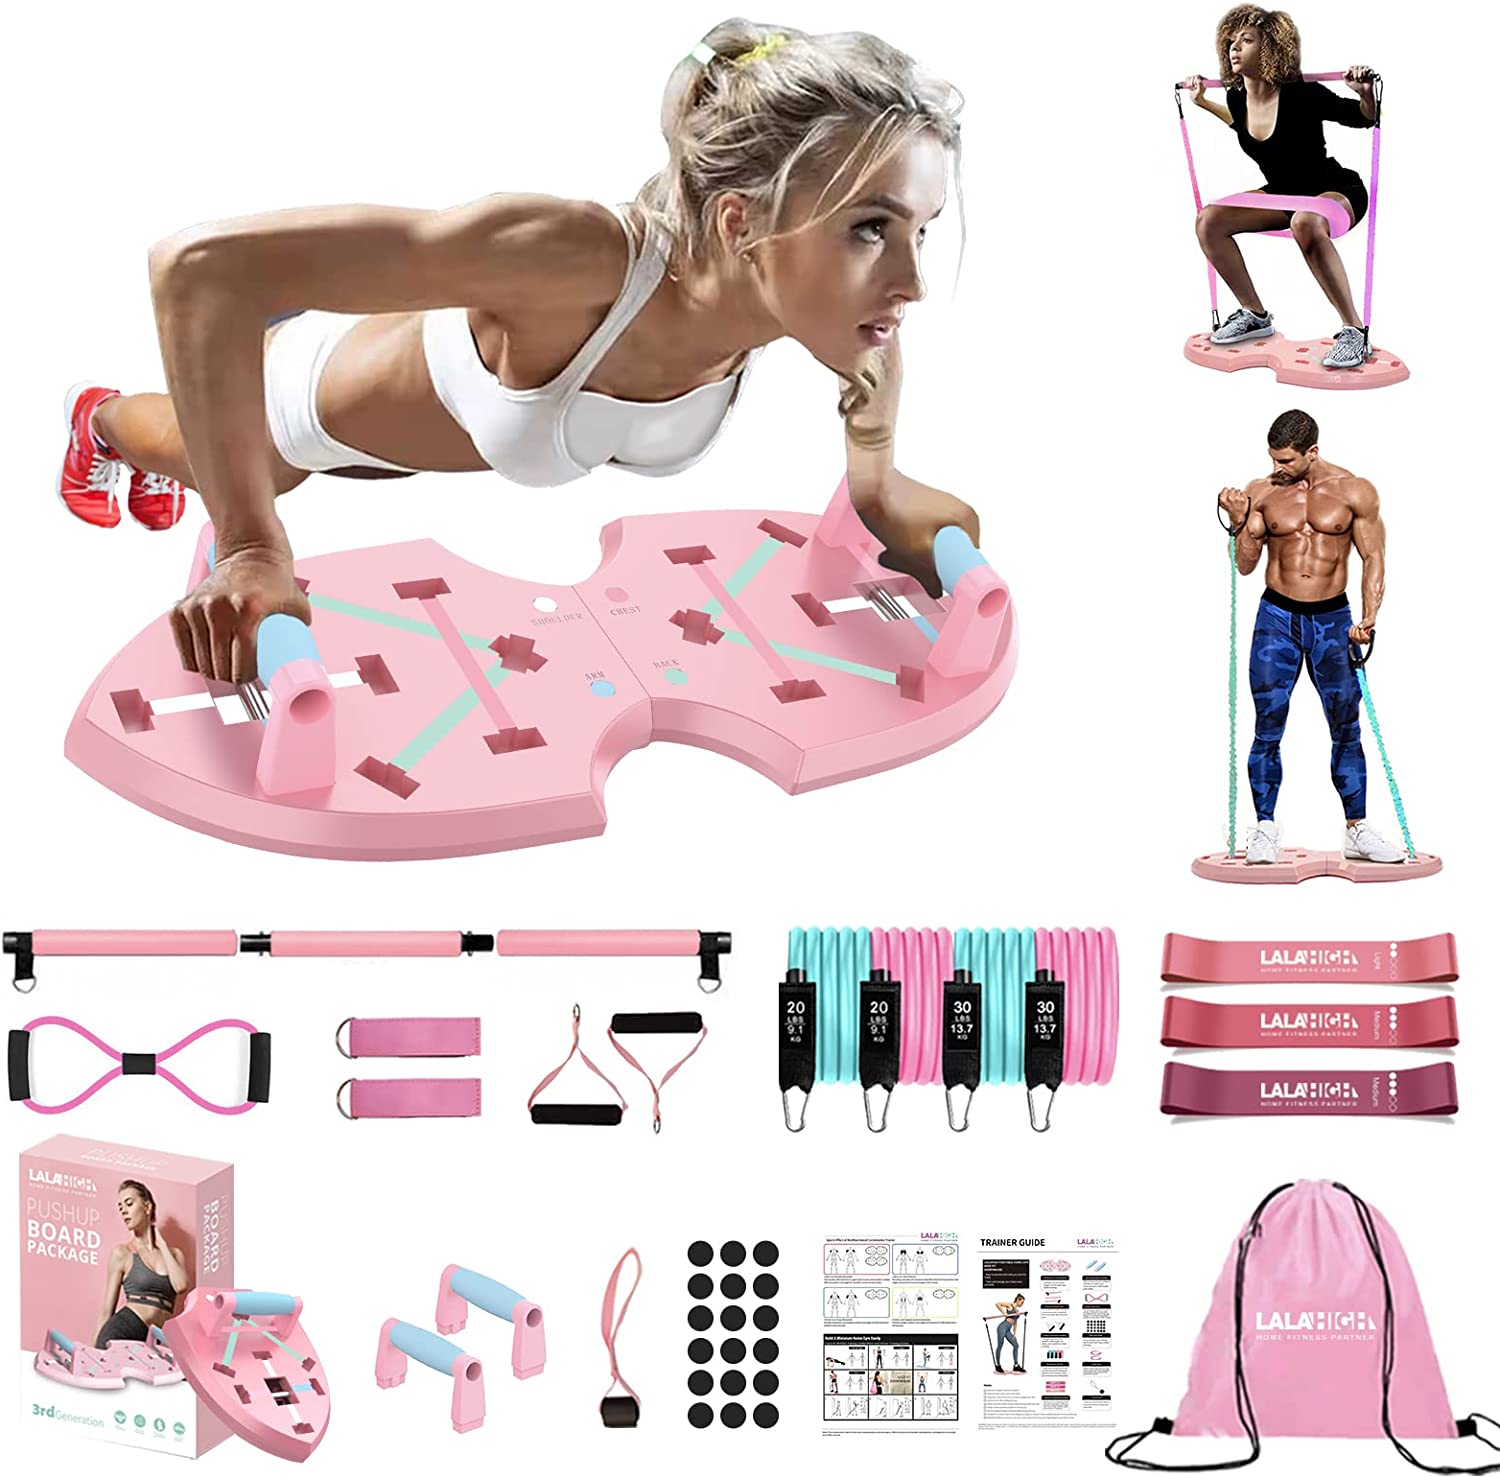 LALAHIGH Push Up Board, Portable Home Workout Equipment for Women & Men,